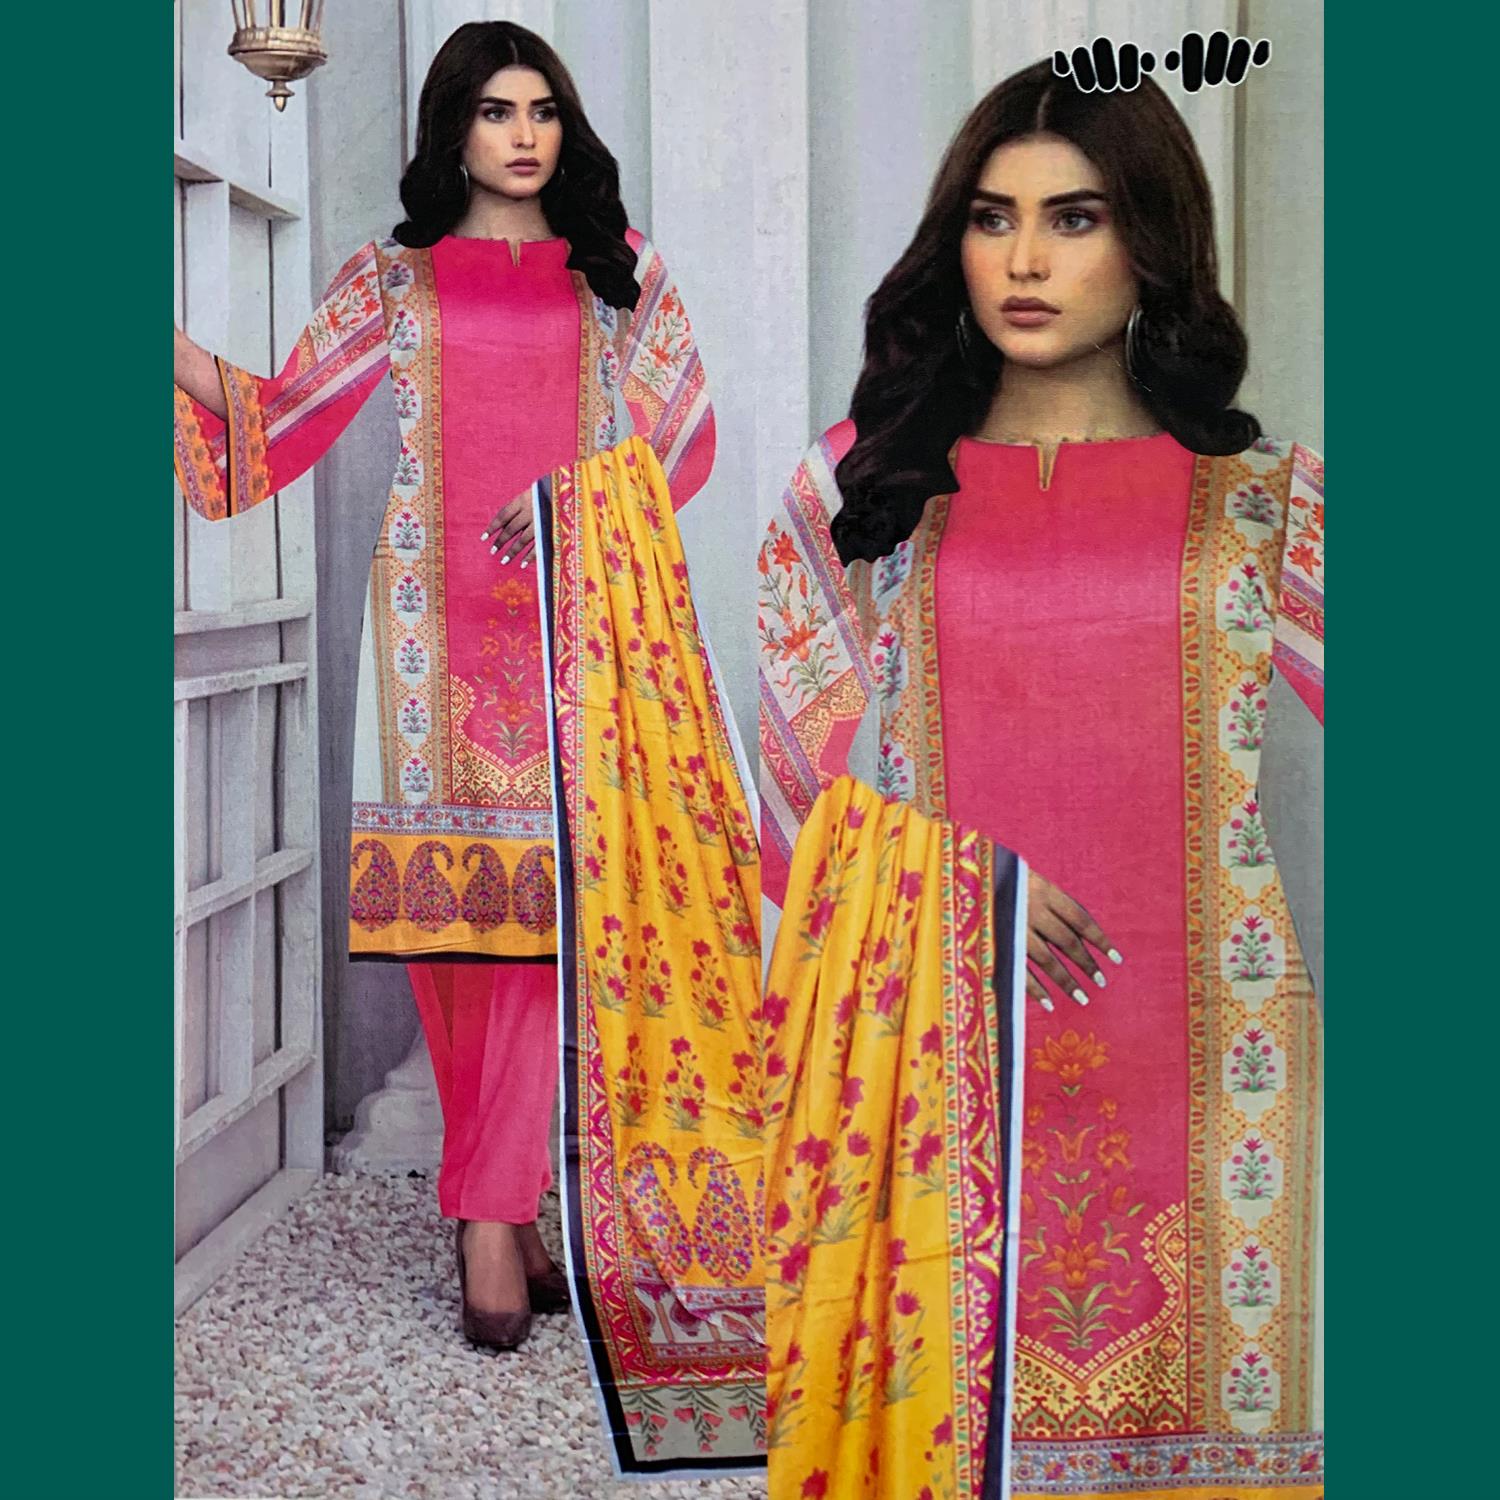 Best Women Clothing Brands in Pakistan: 2022 Edition - Hutch.pk